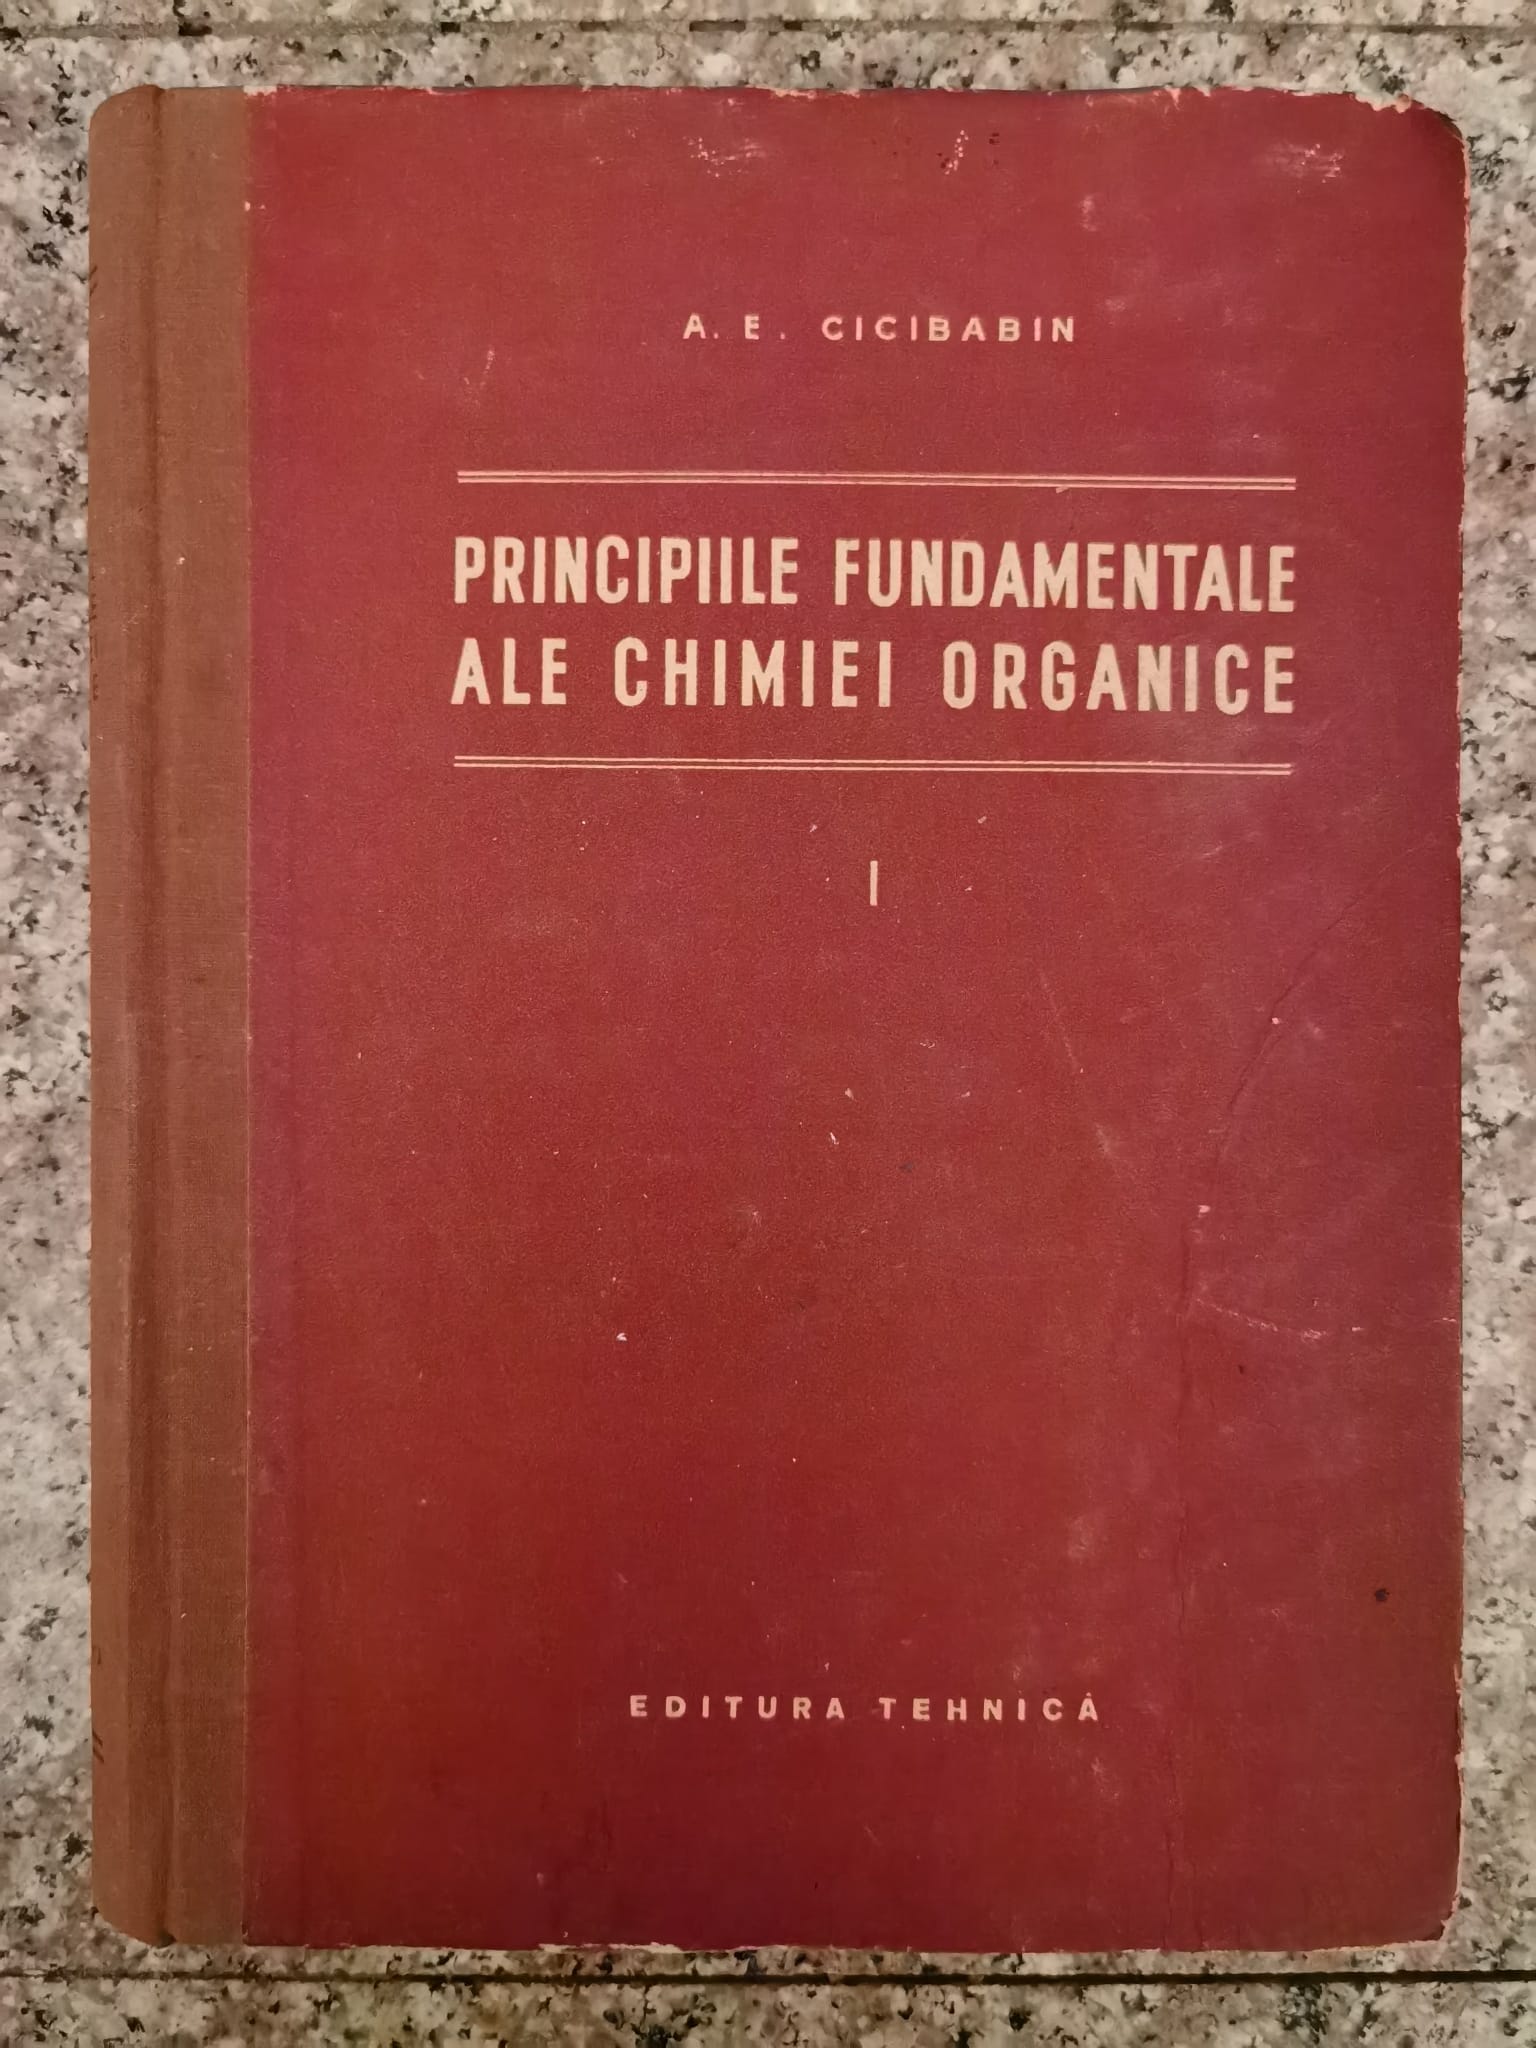 principiile fundamentale ale chimiei organice 1                                                      a.e. cicibabin                                                                                      